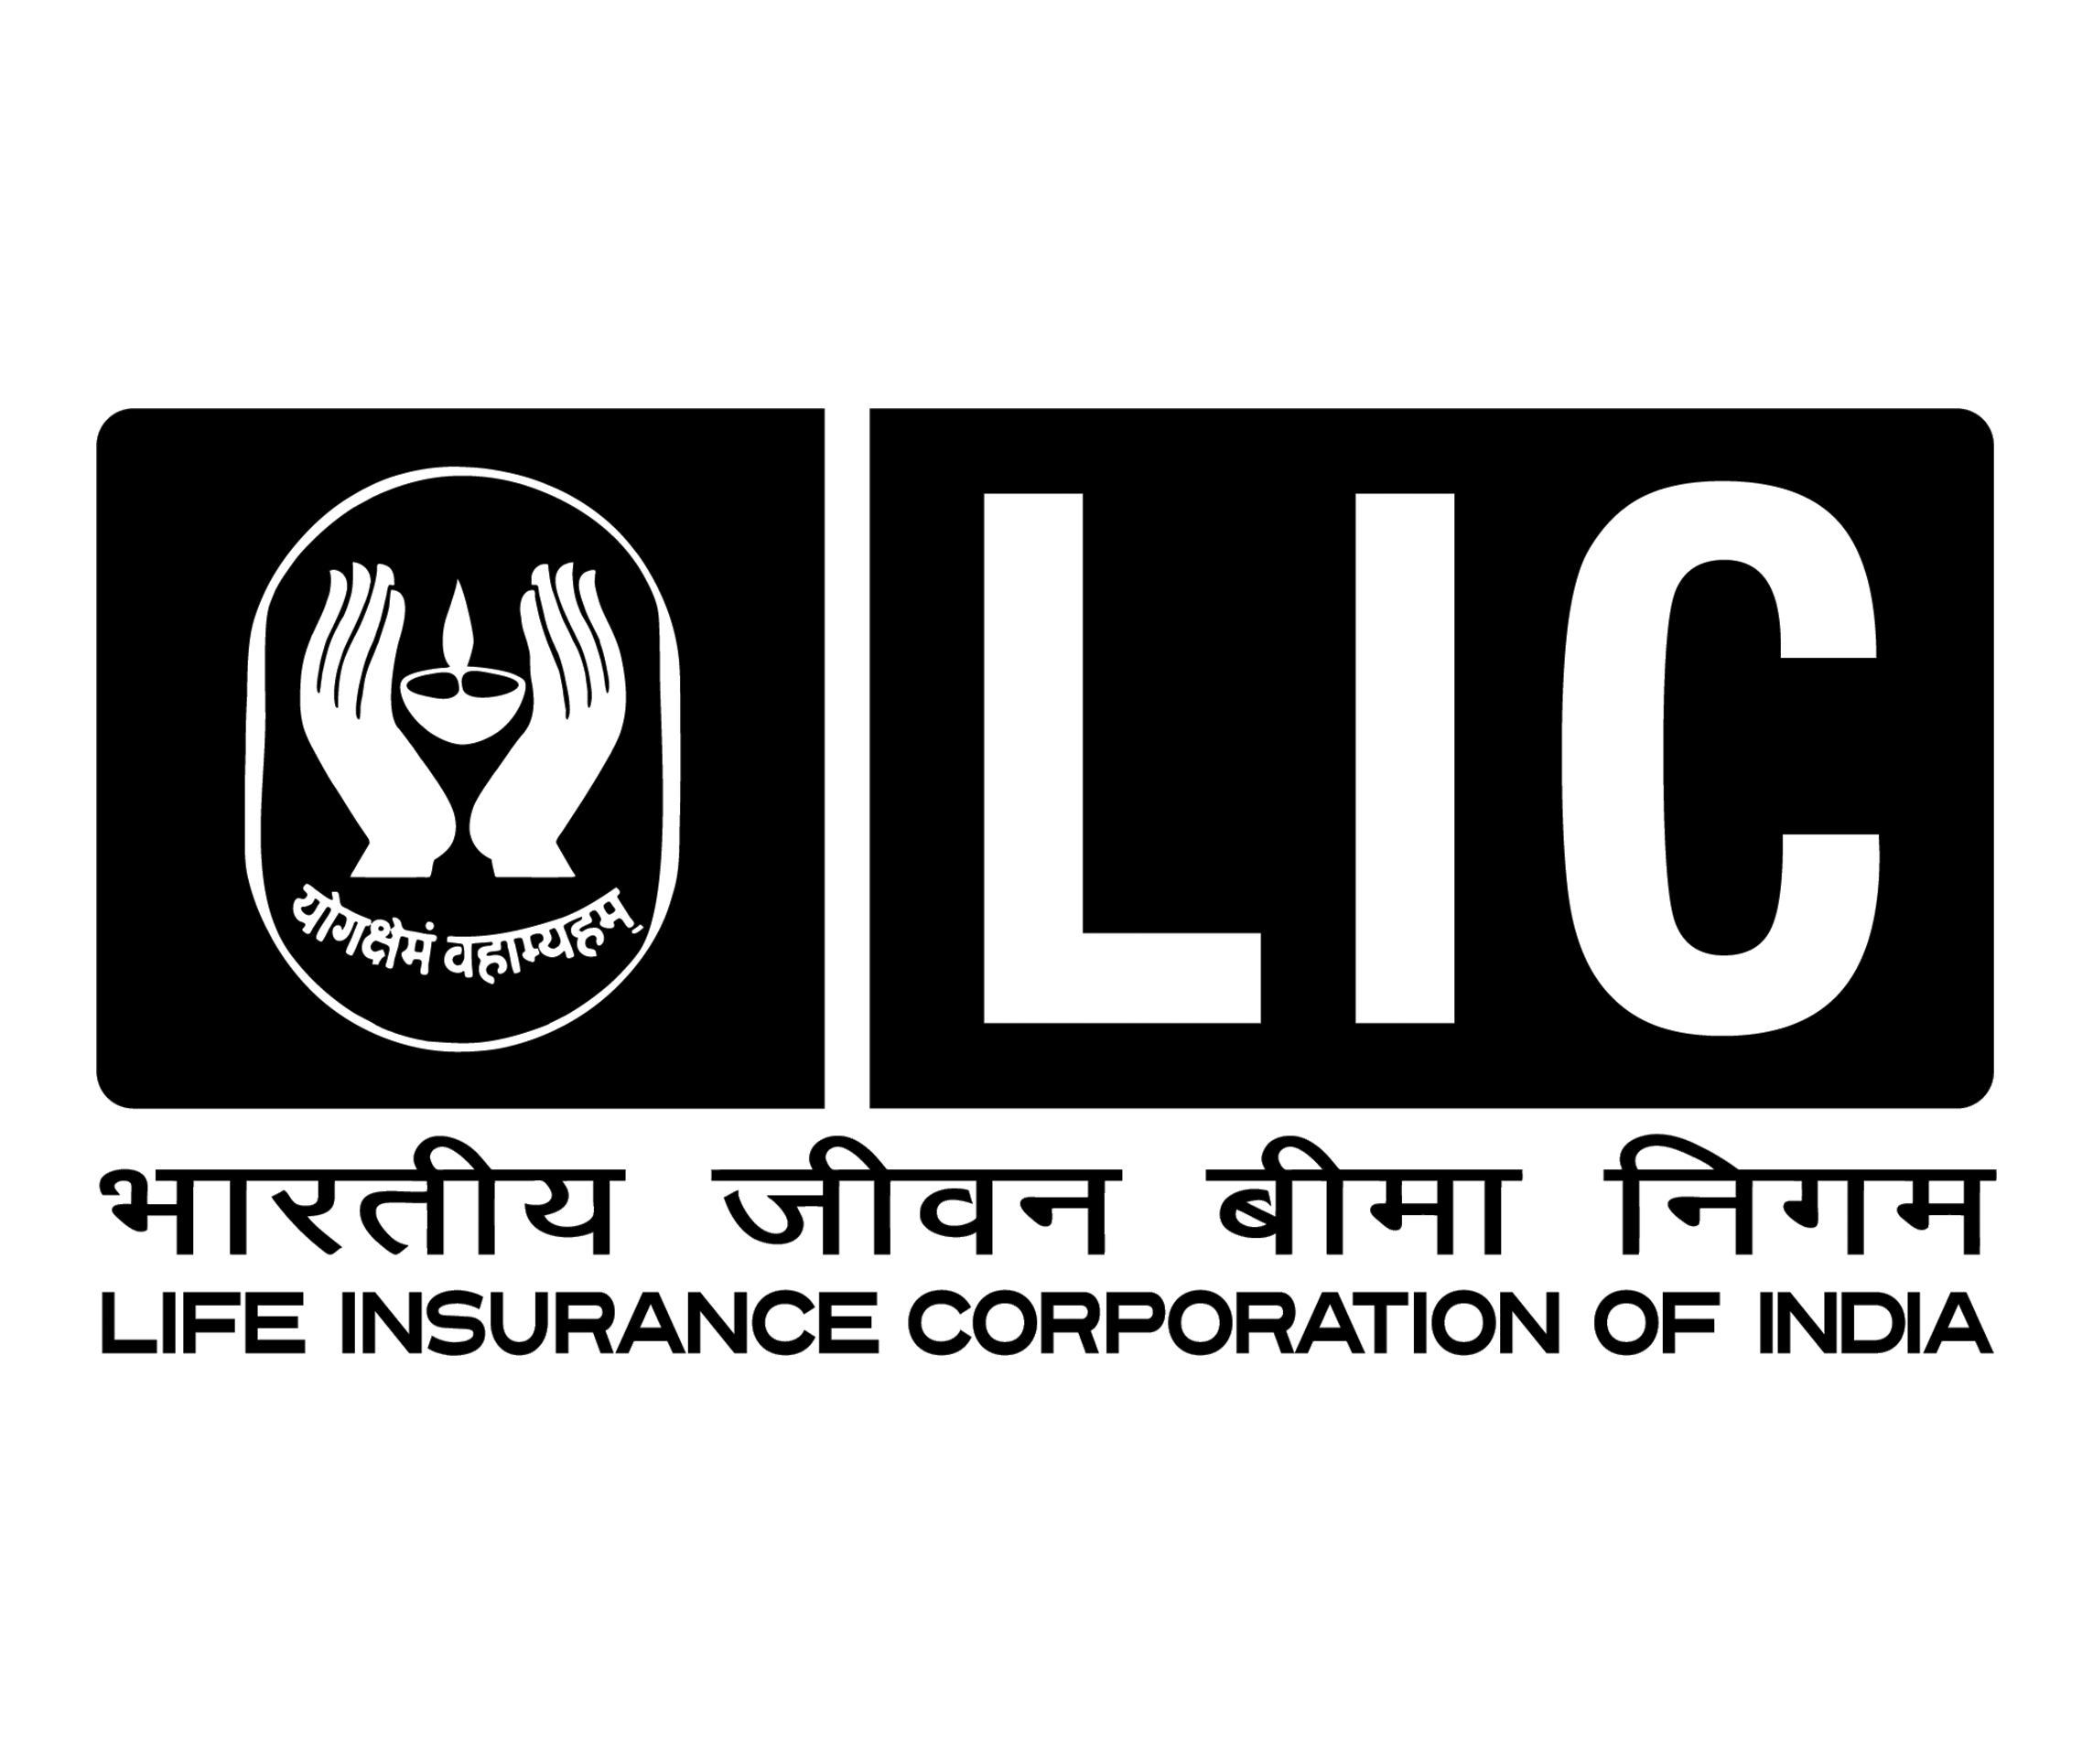 Lic logo black and white